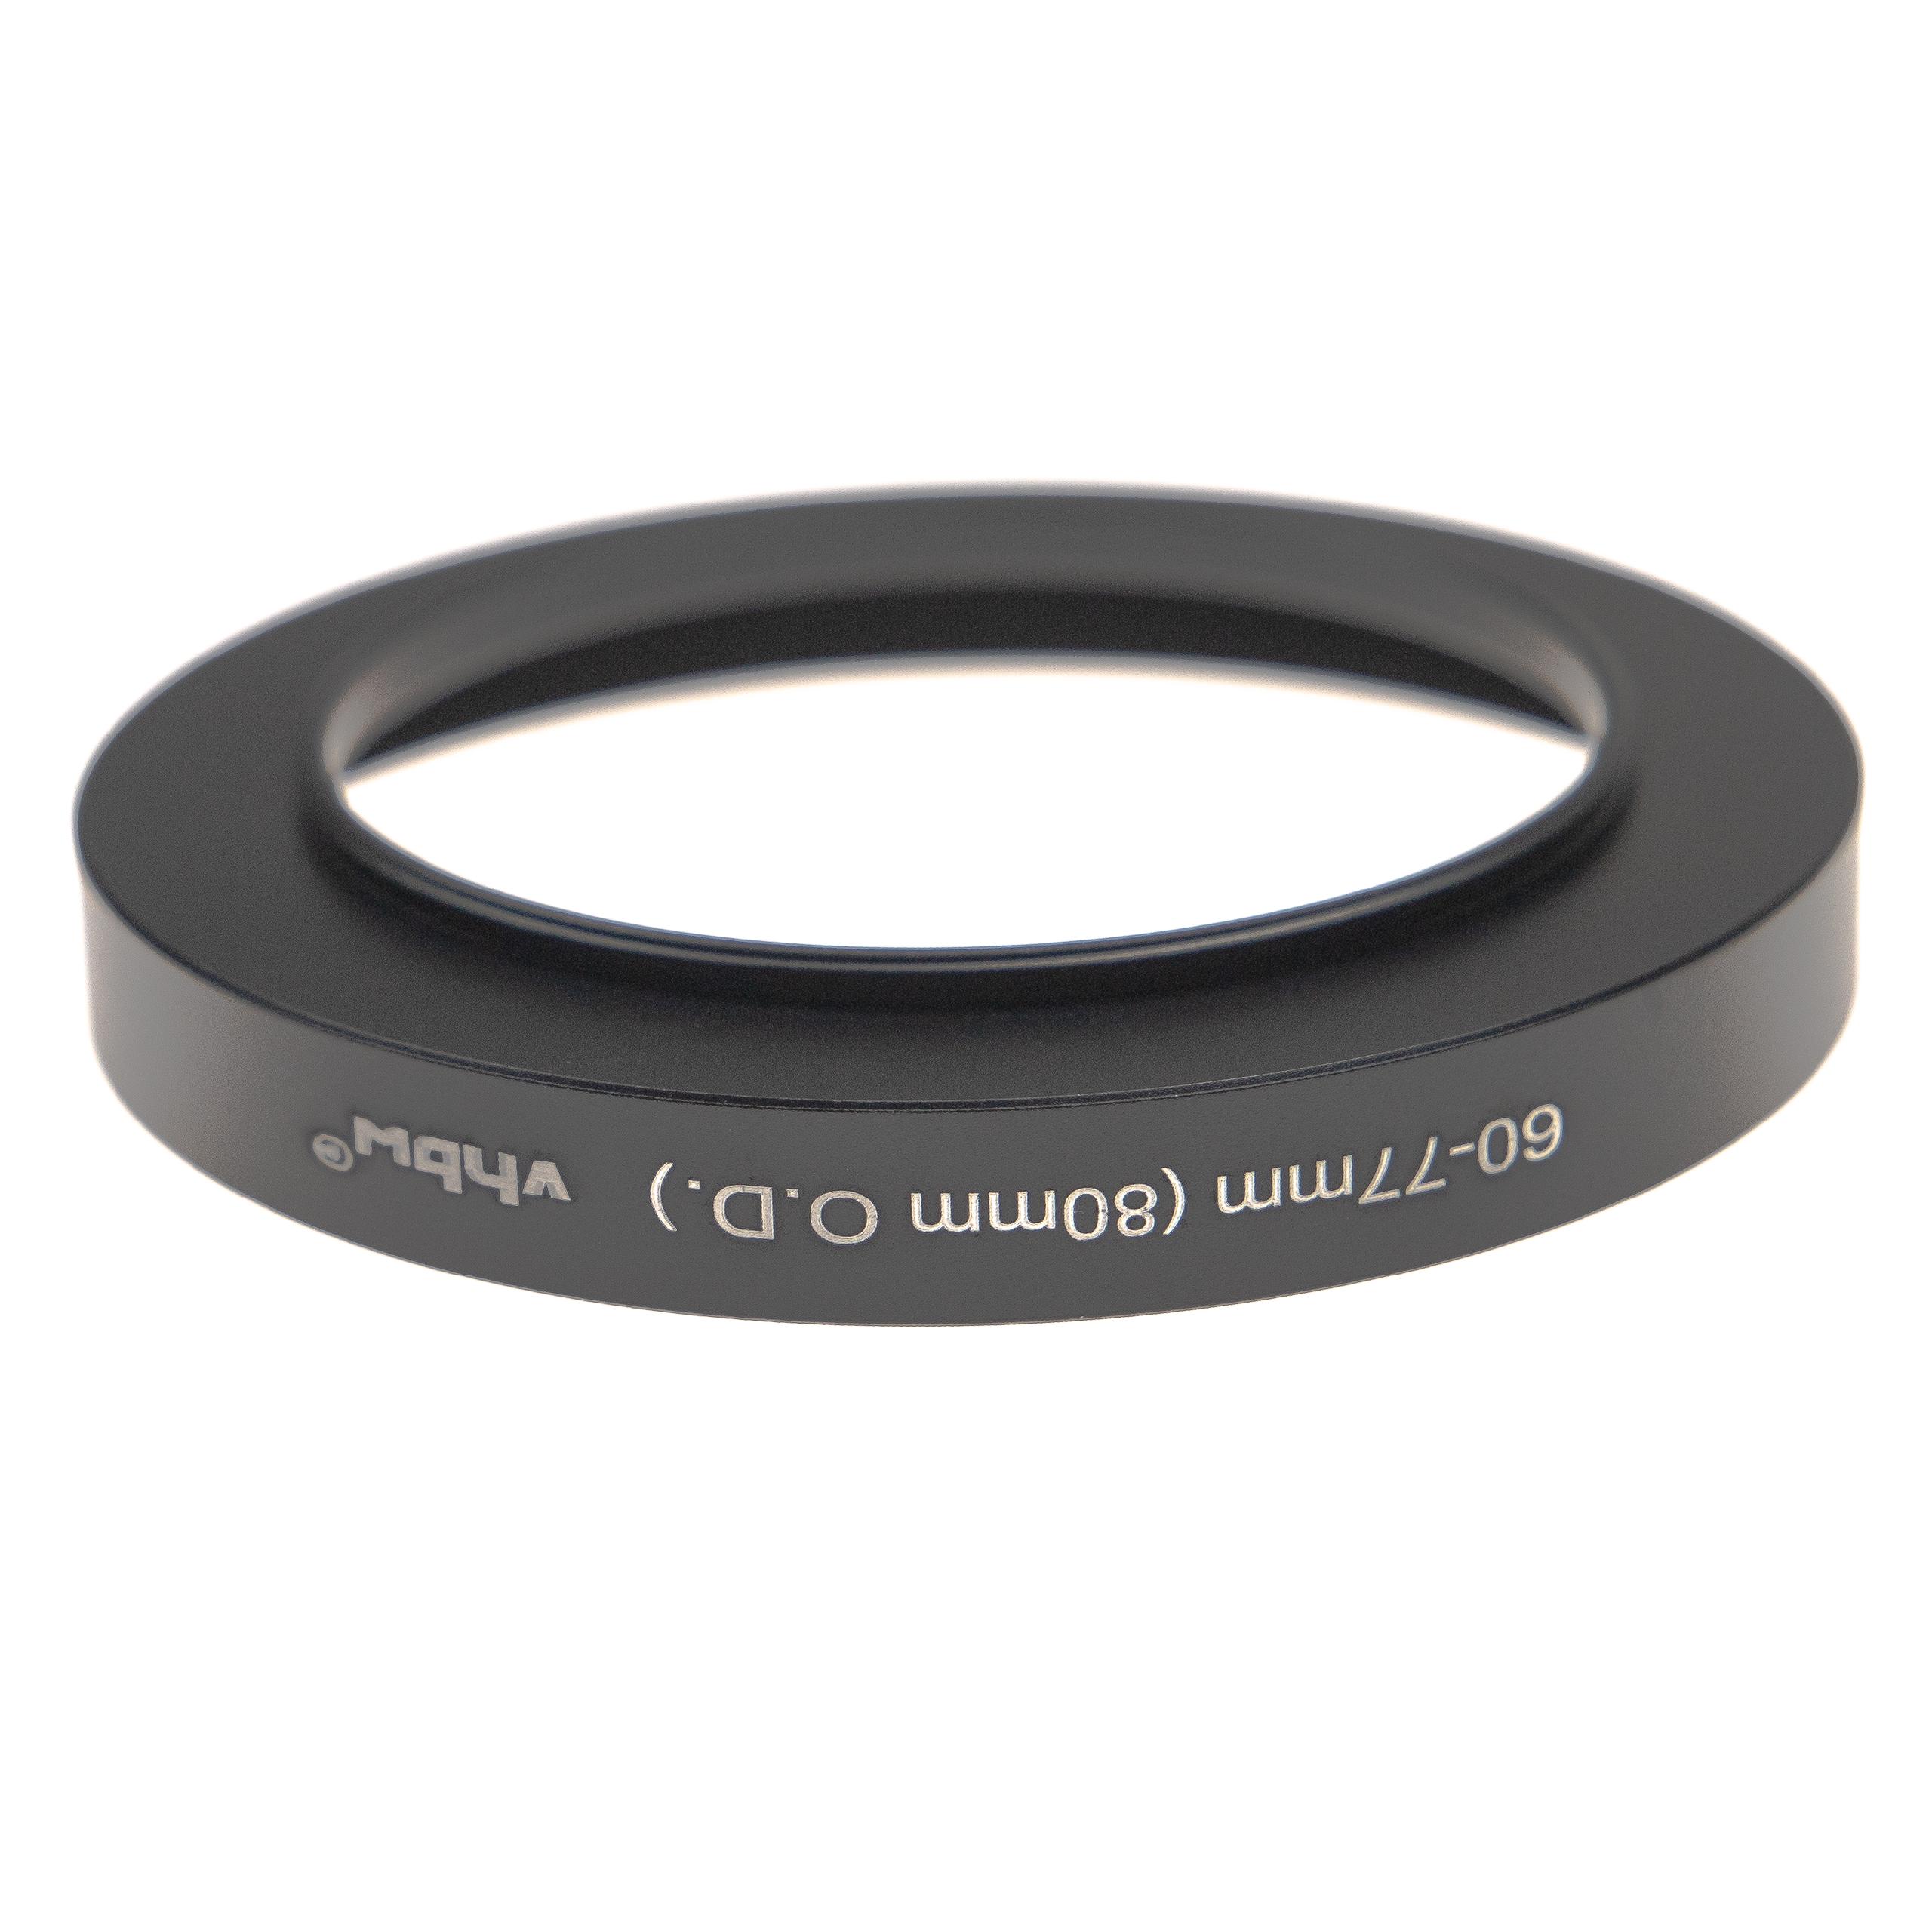 Step-Up-Ring Adapter 60 mm auf 77 mm passend für Matte Boxen 80 mm O.D. - Filteradapter